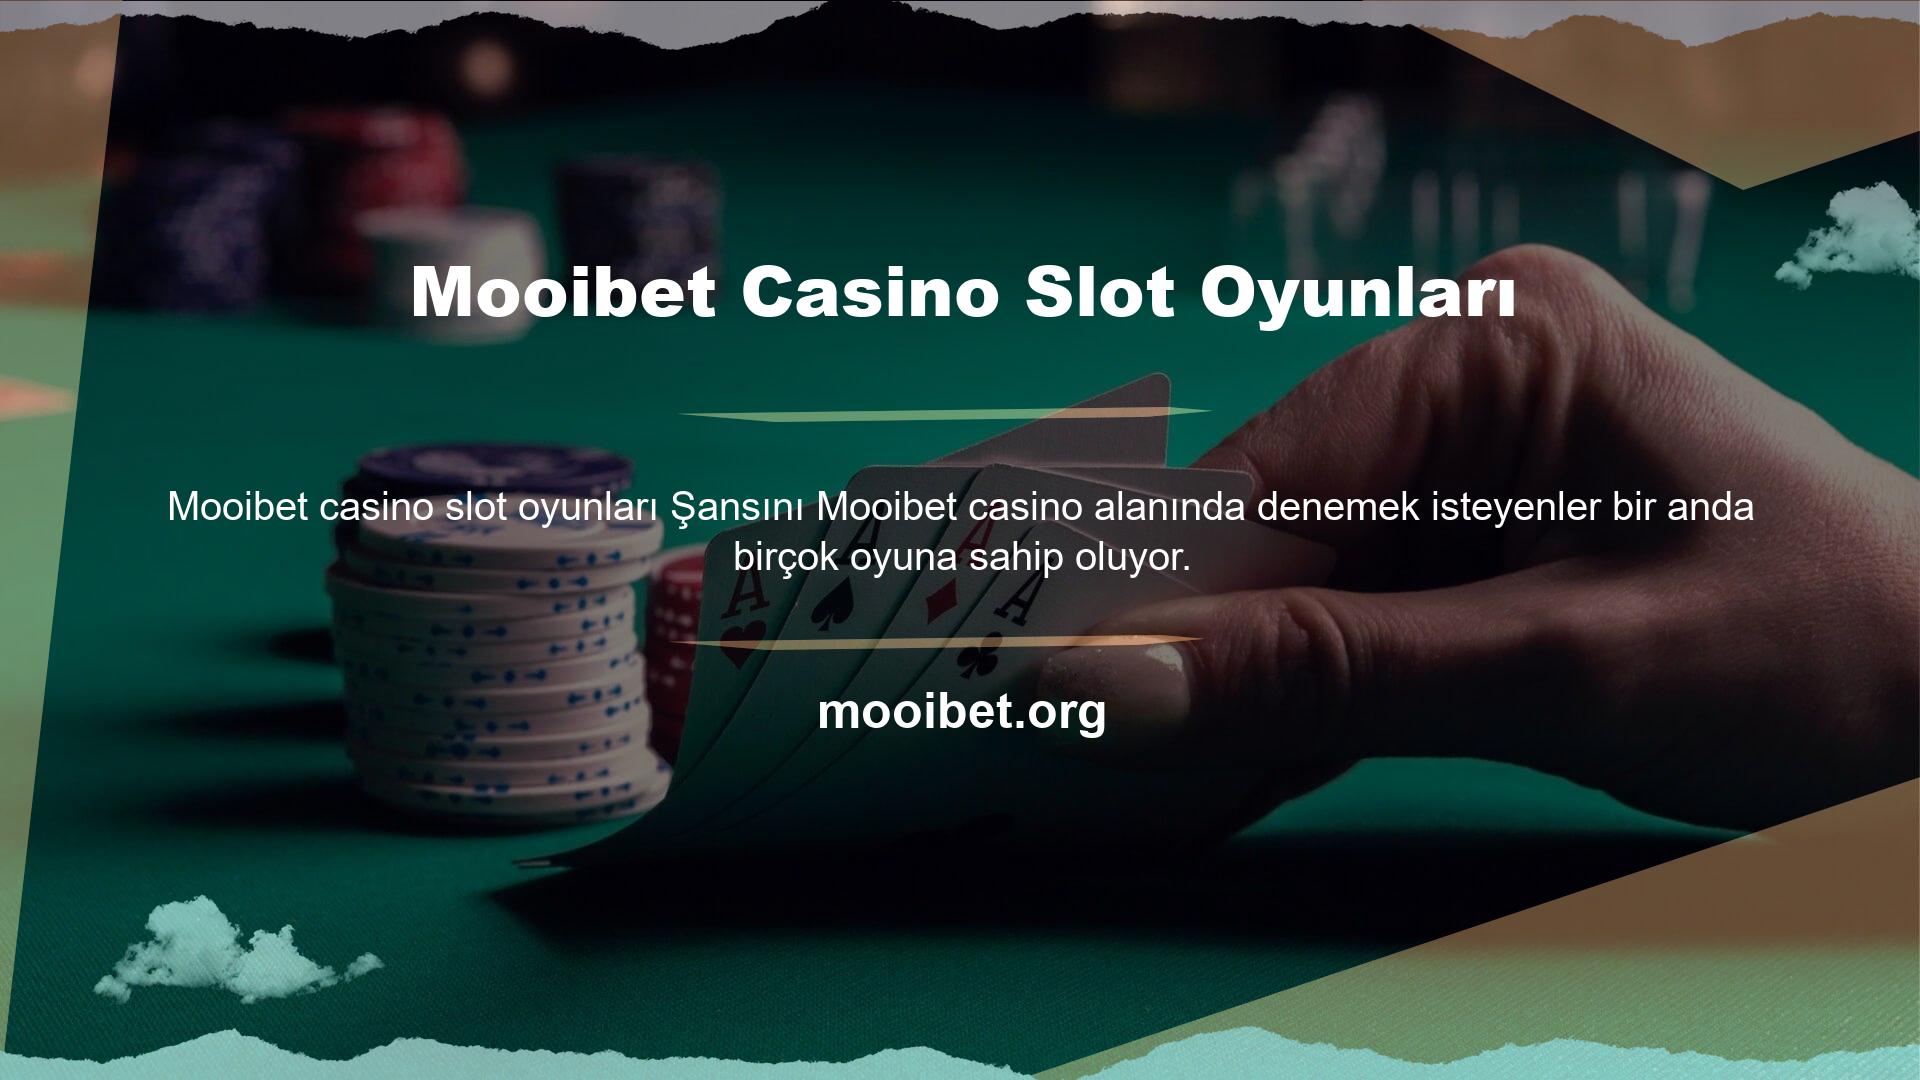 Mooibet casino slot oyunları